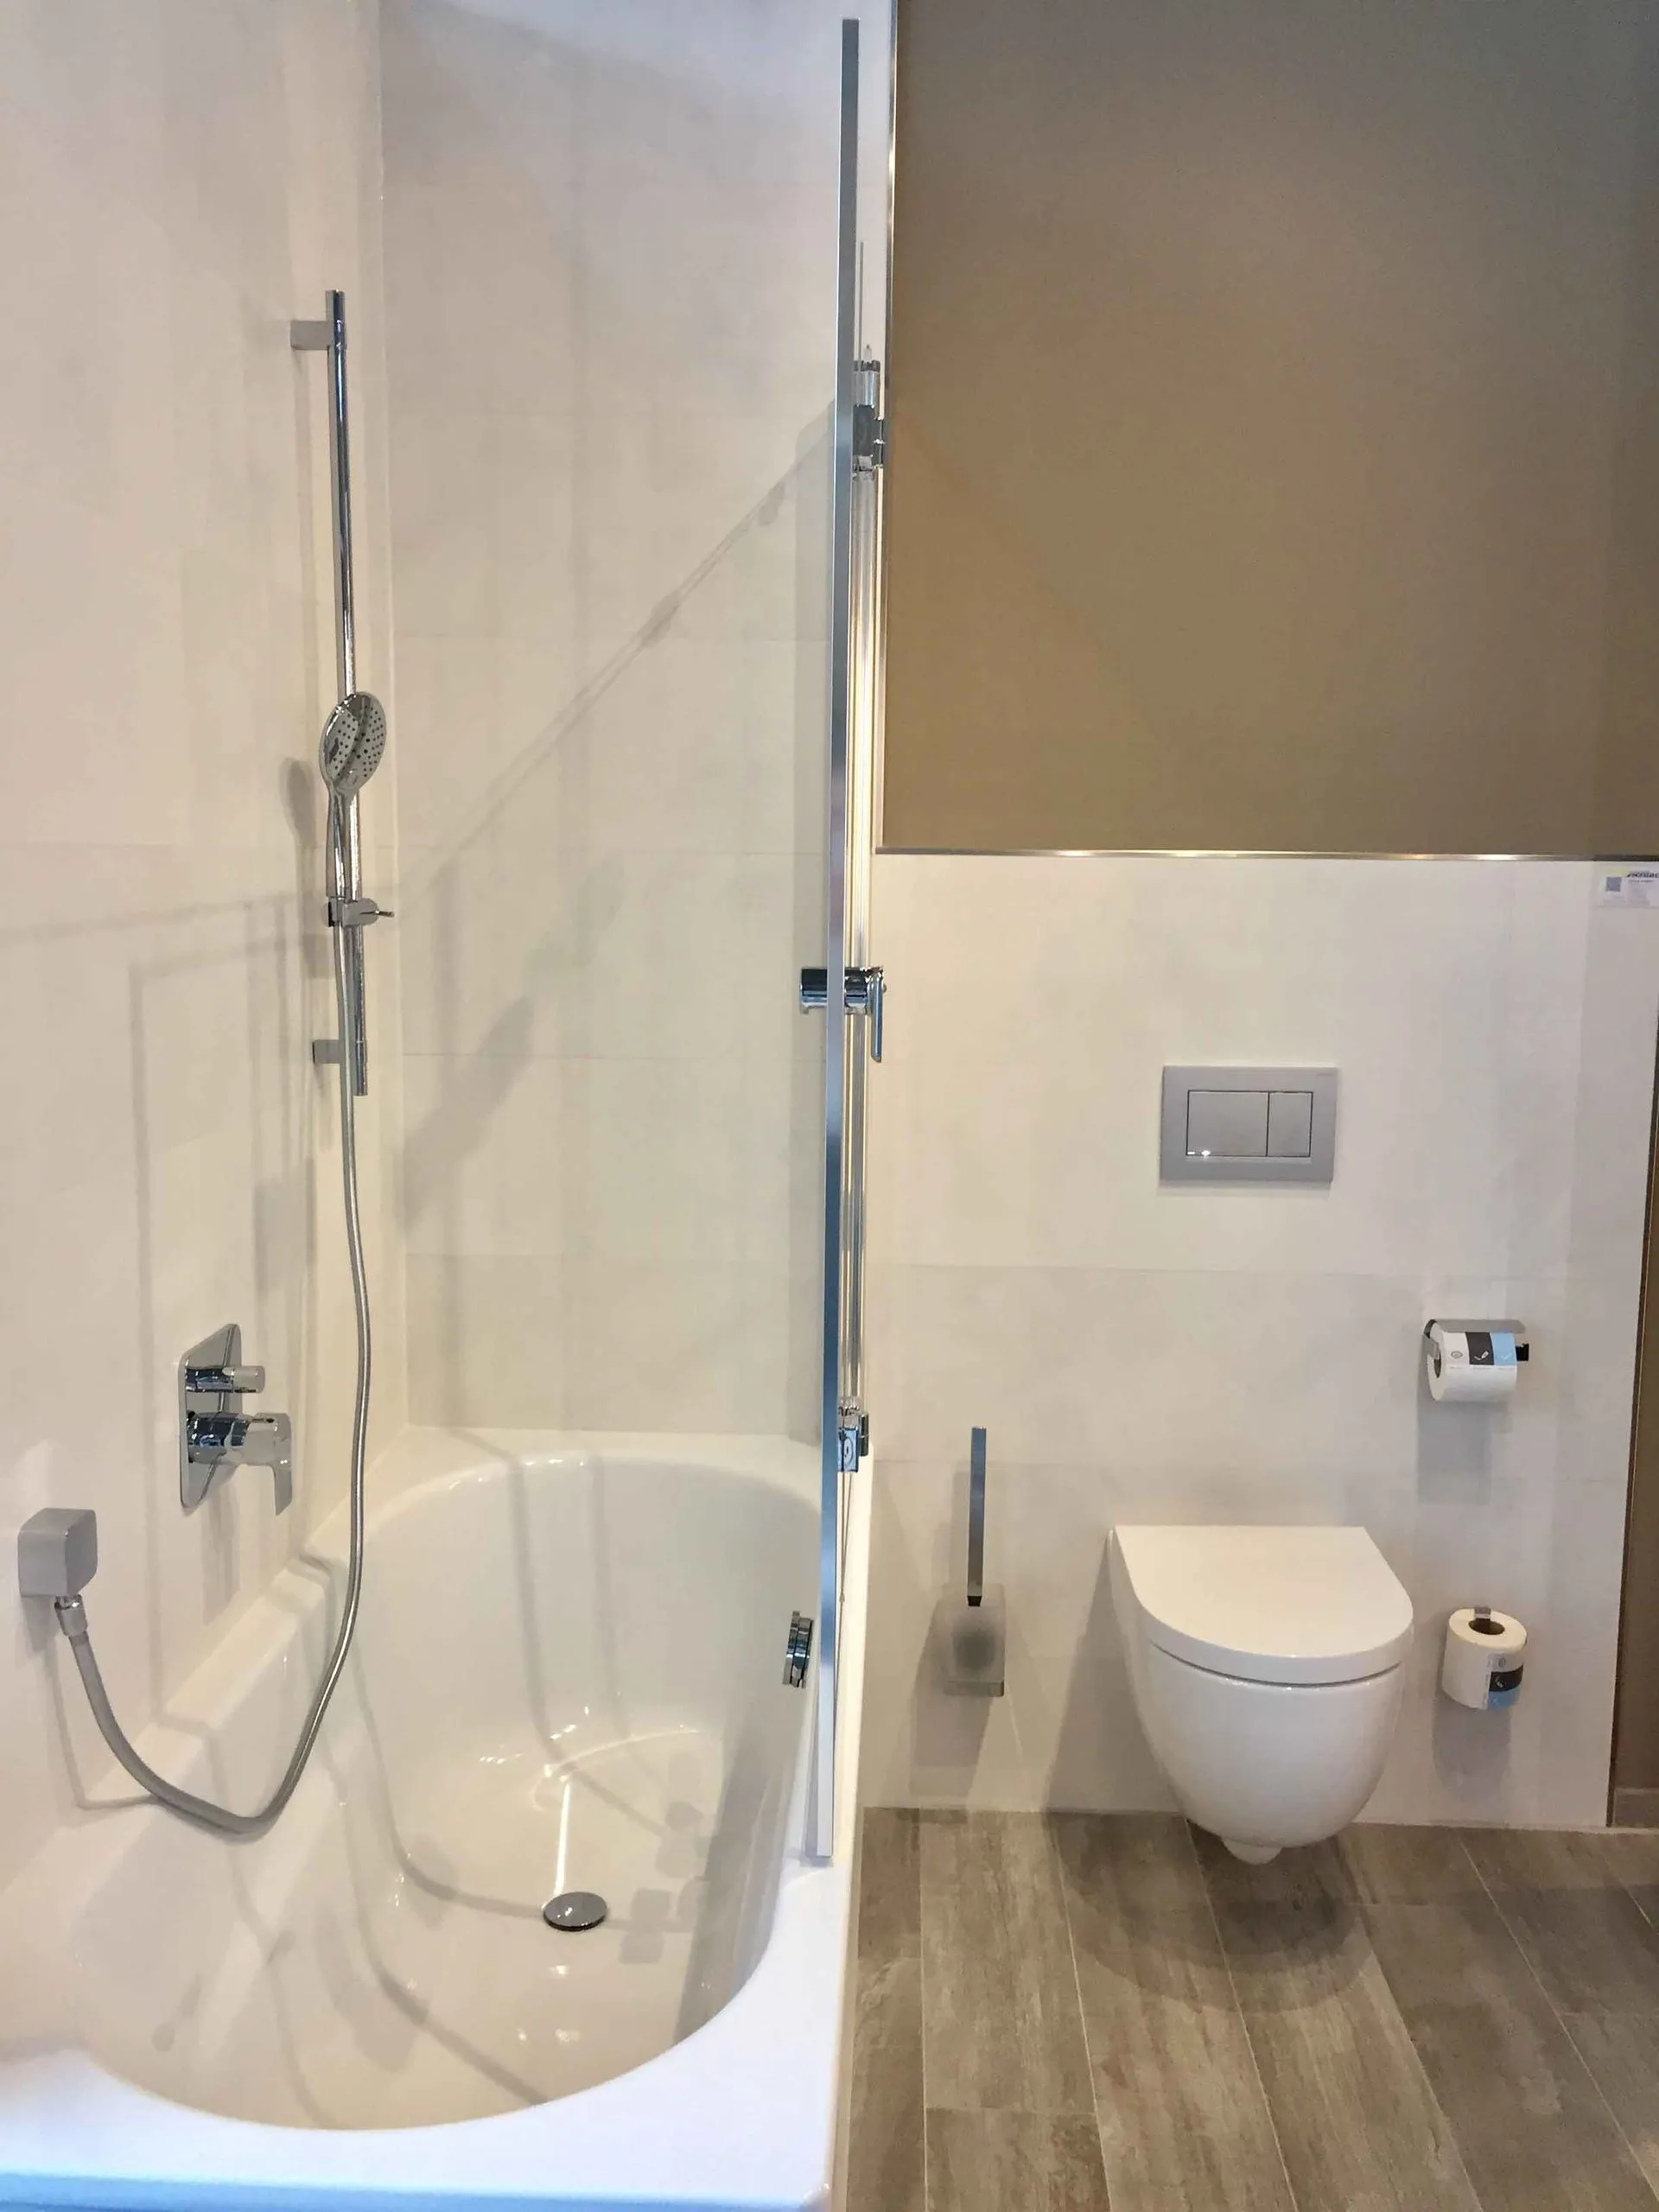 bathtub and shower enclosure